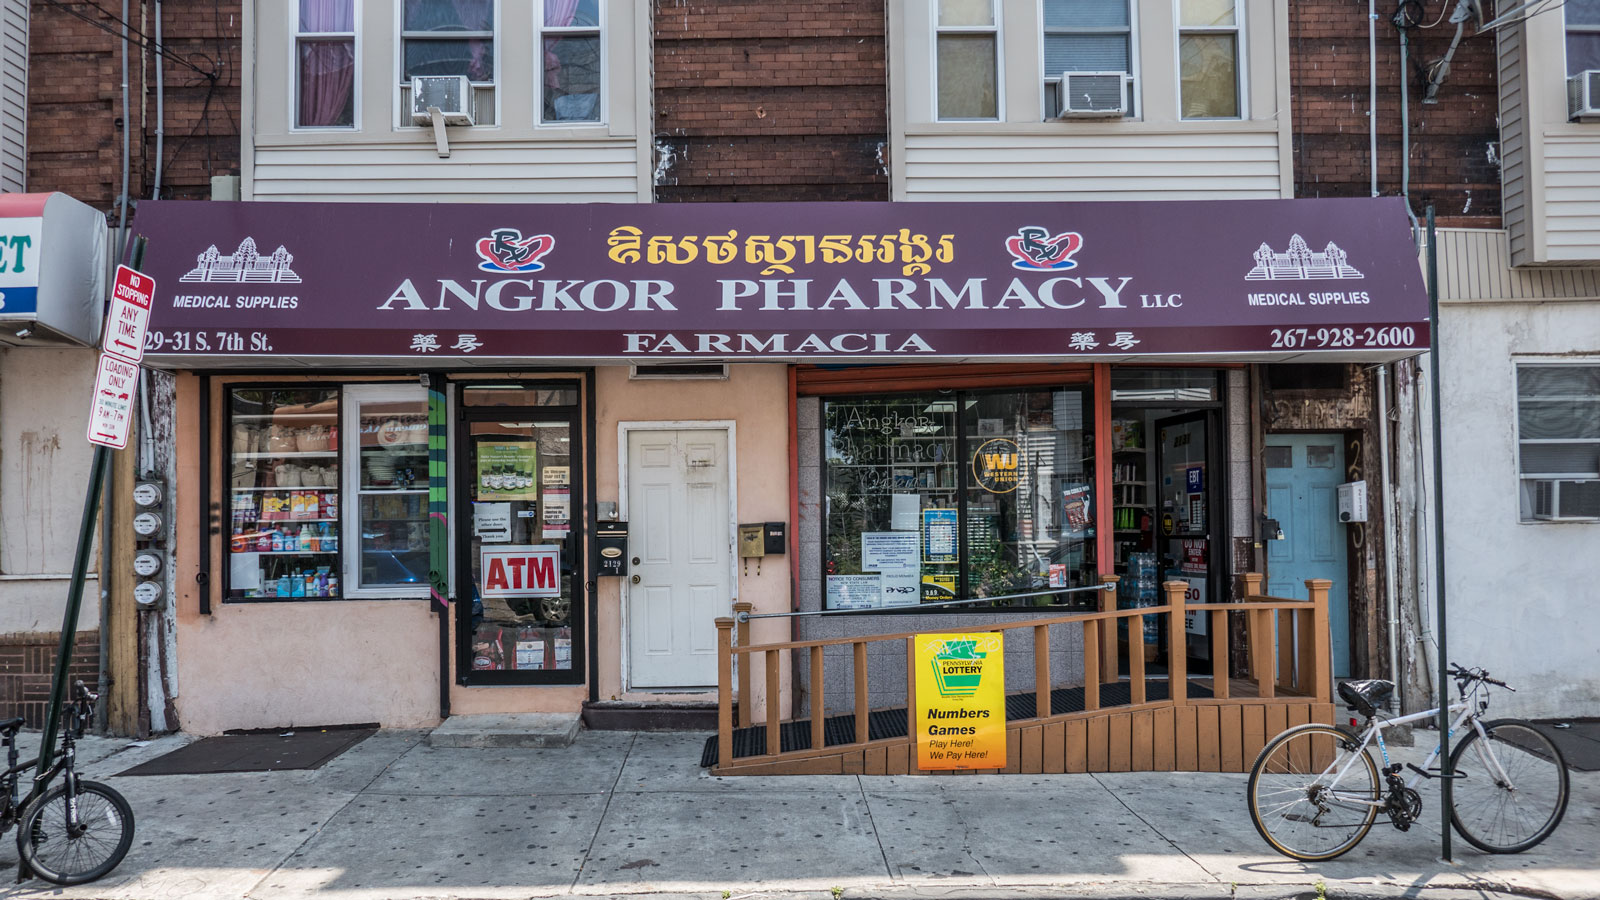 Angkor Pharmacy Philadelphia